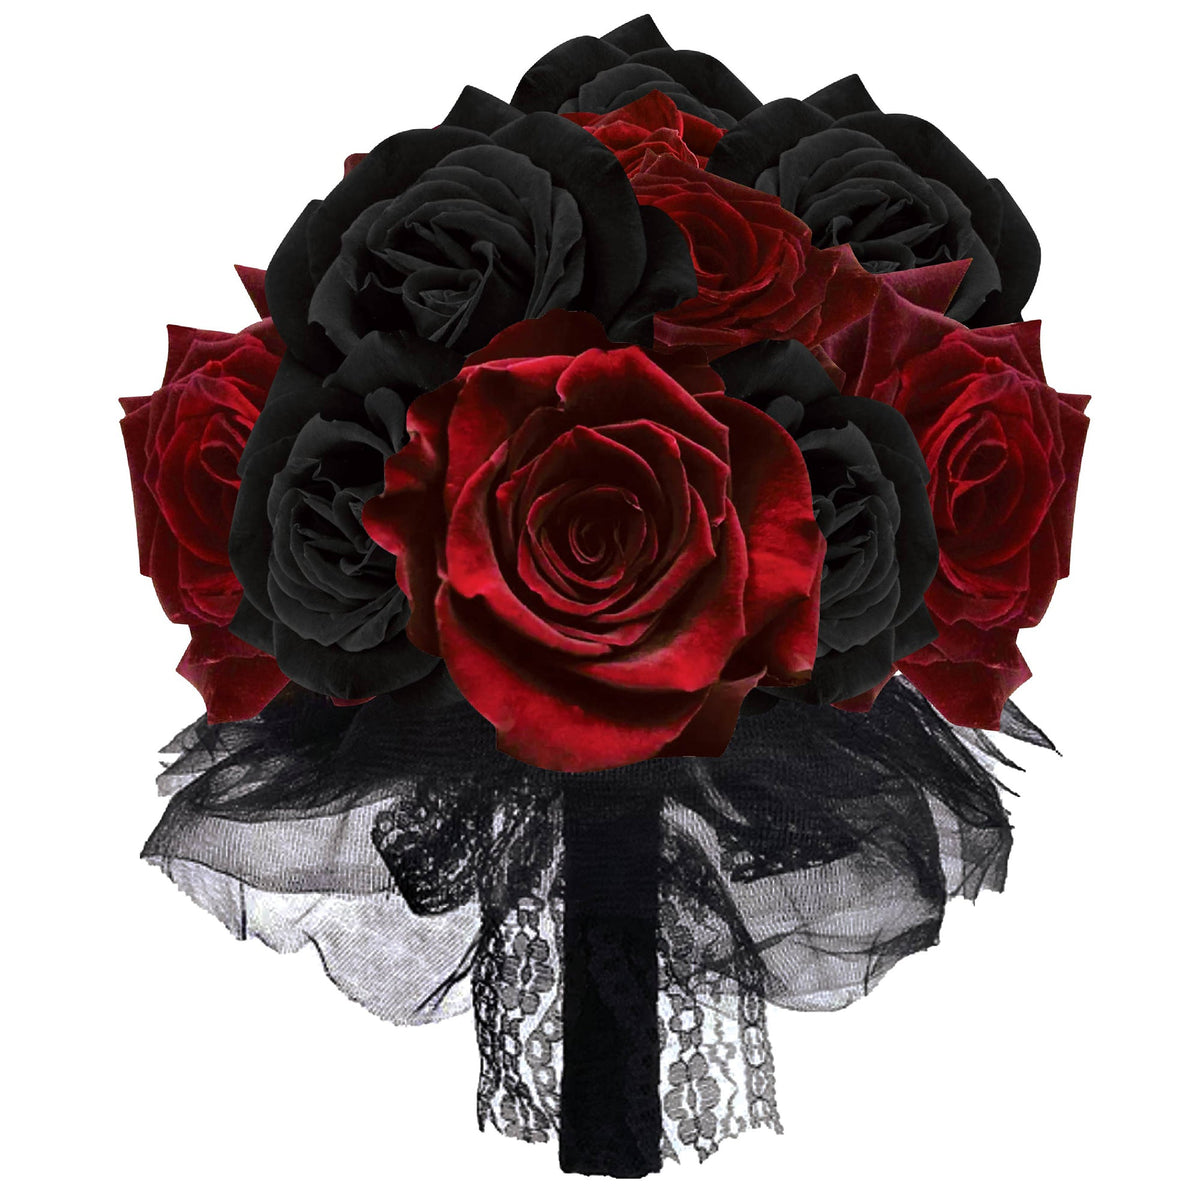 SUIT YOURSELF COSTUME CO. Costume Accessories Dark Flower Bouquet